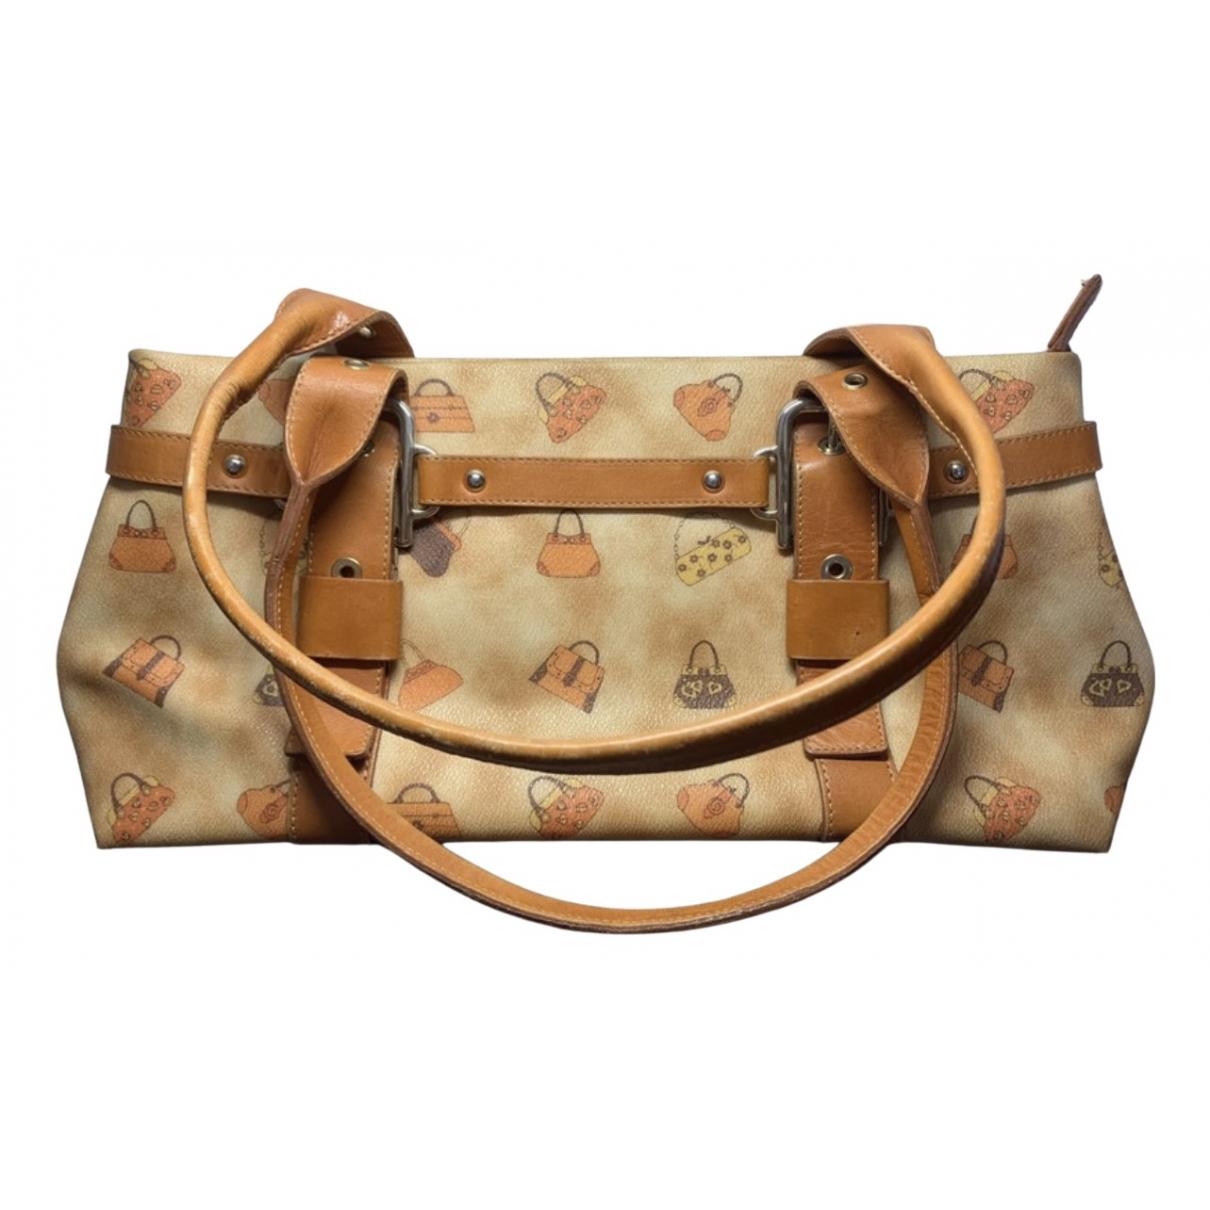 Loristella Handbags for Women - Vestiaire Collective